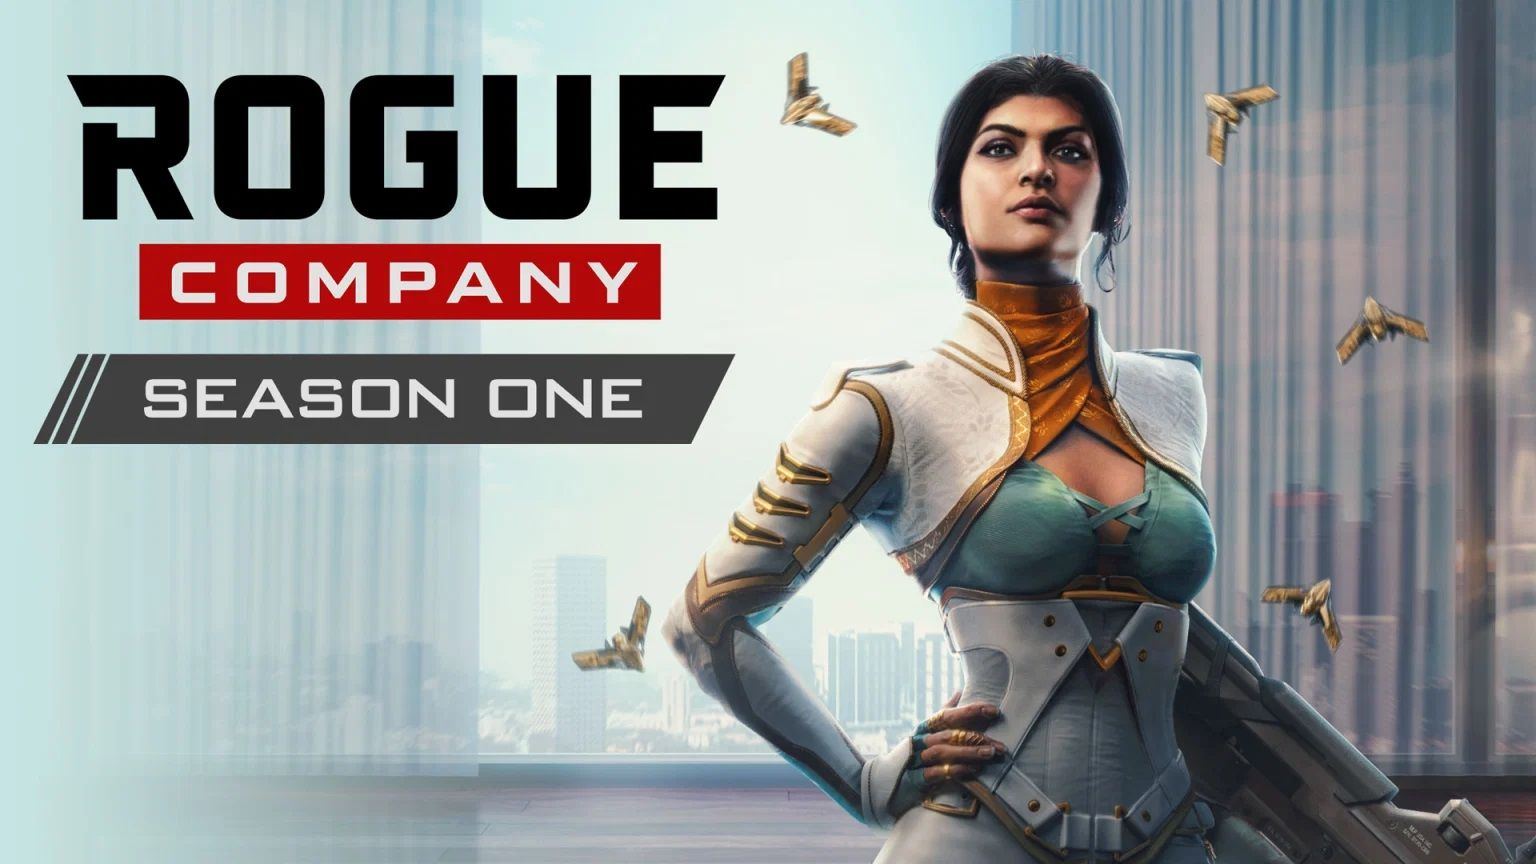 Rogue Company Kestrel announced